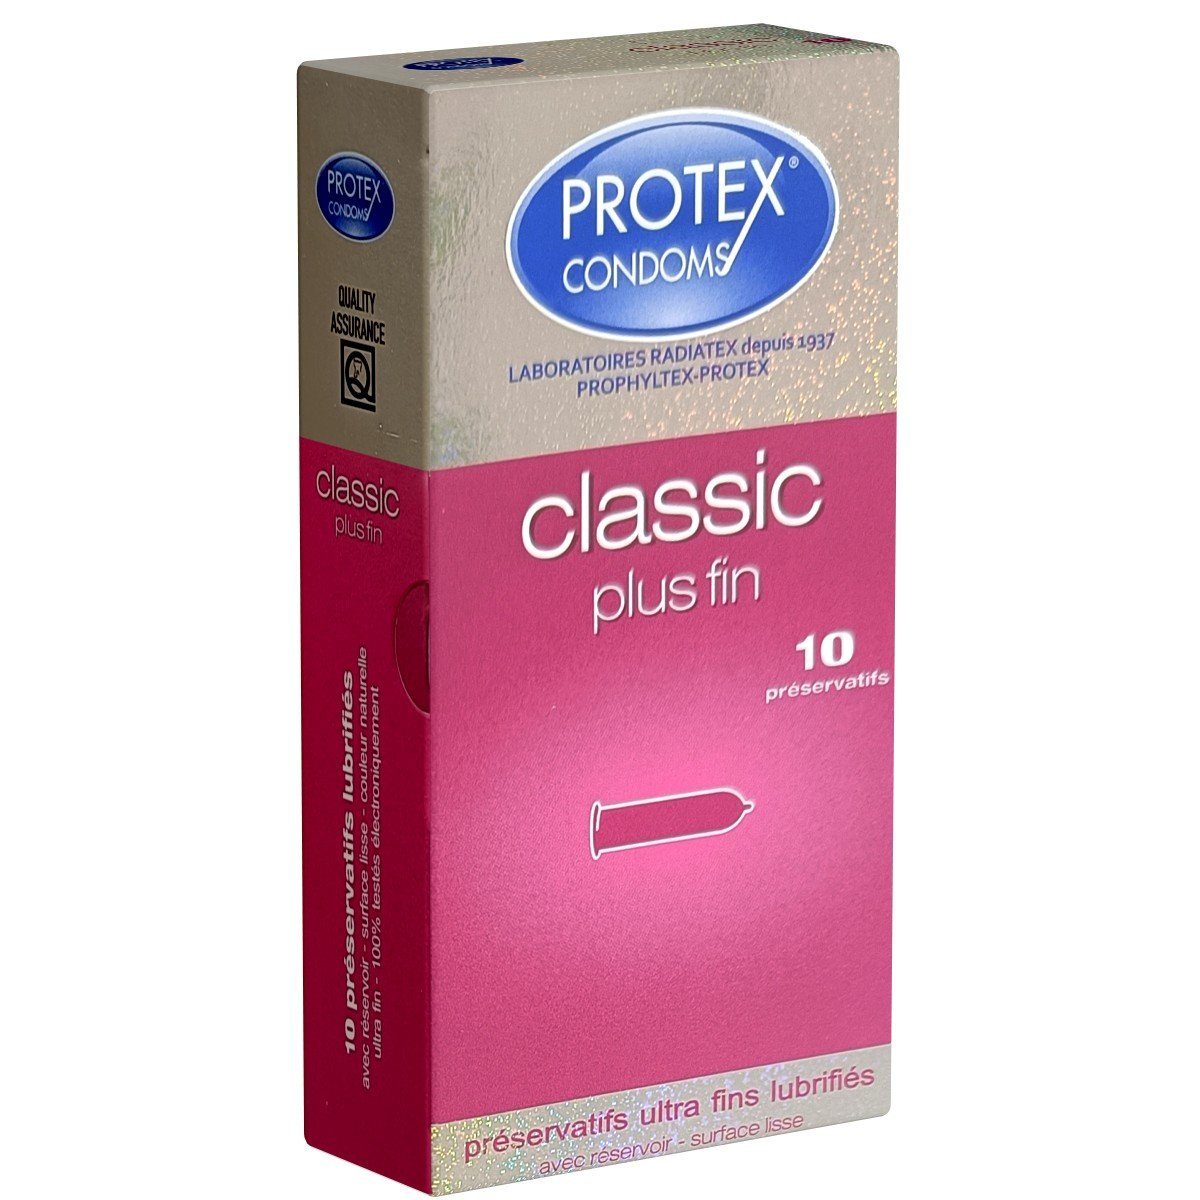 Protex Kondome CLASSIC Plus Fin St., mit, Packung Kondome superdünne 10 Frankreich aus